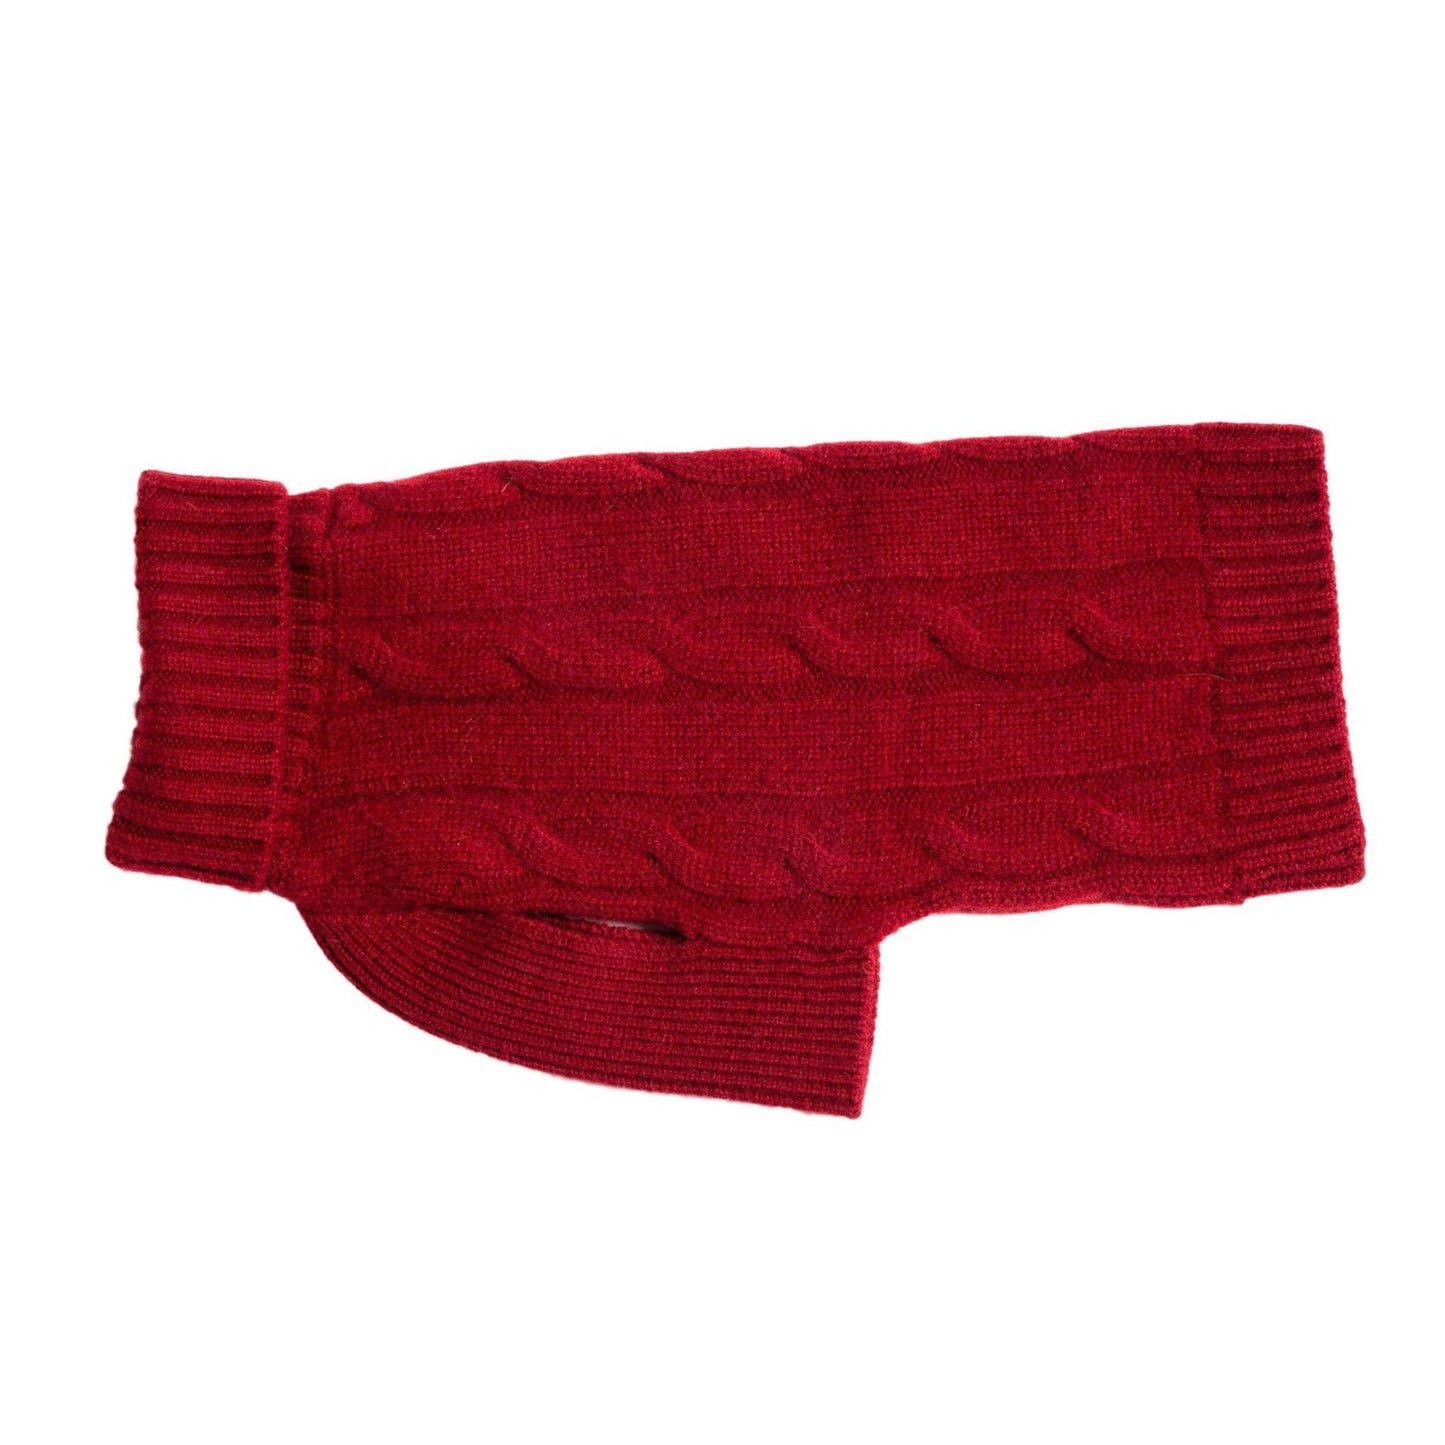 Cableknit Cashmere Dog Sweater, Burgundy